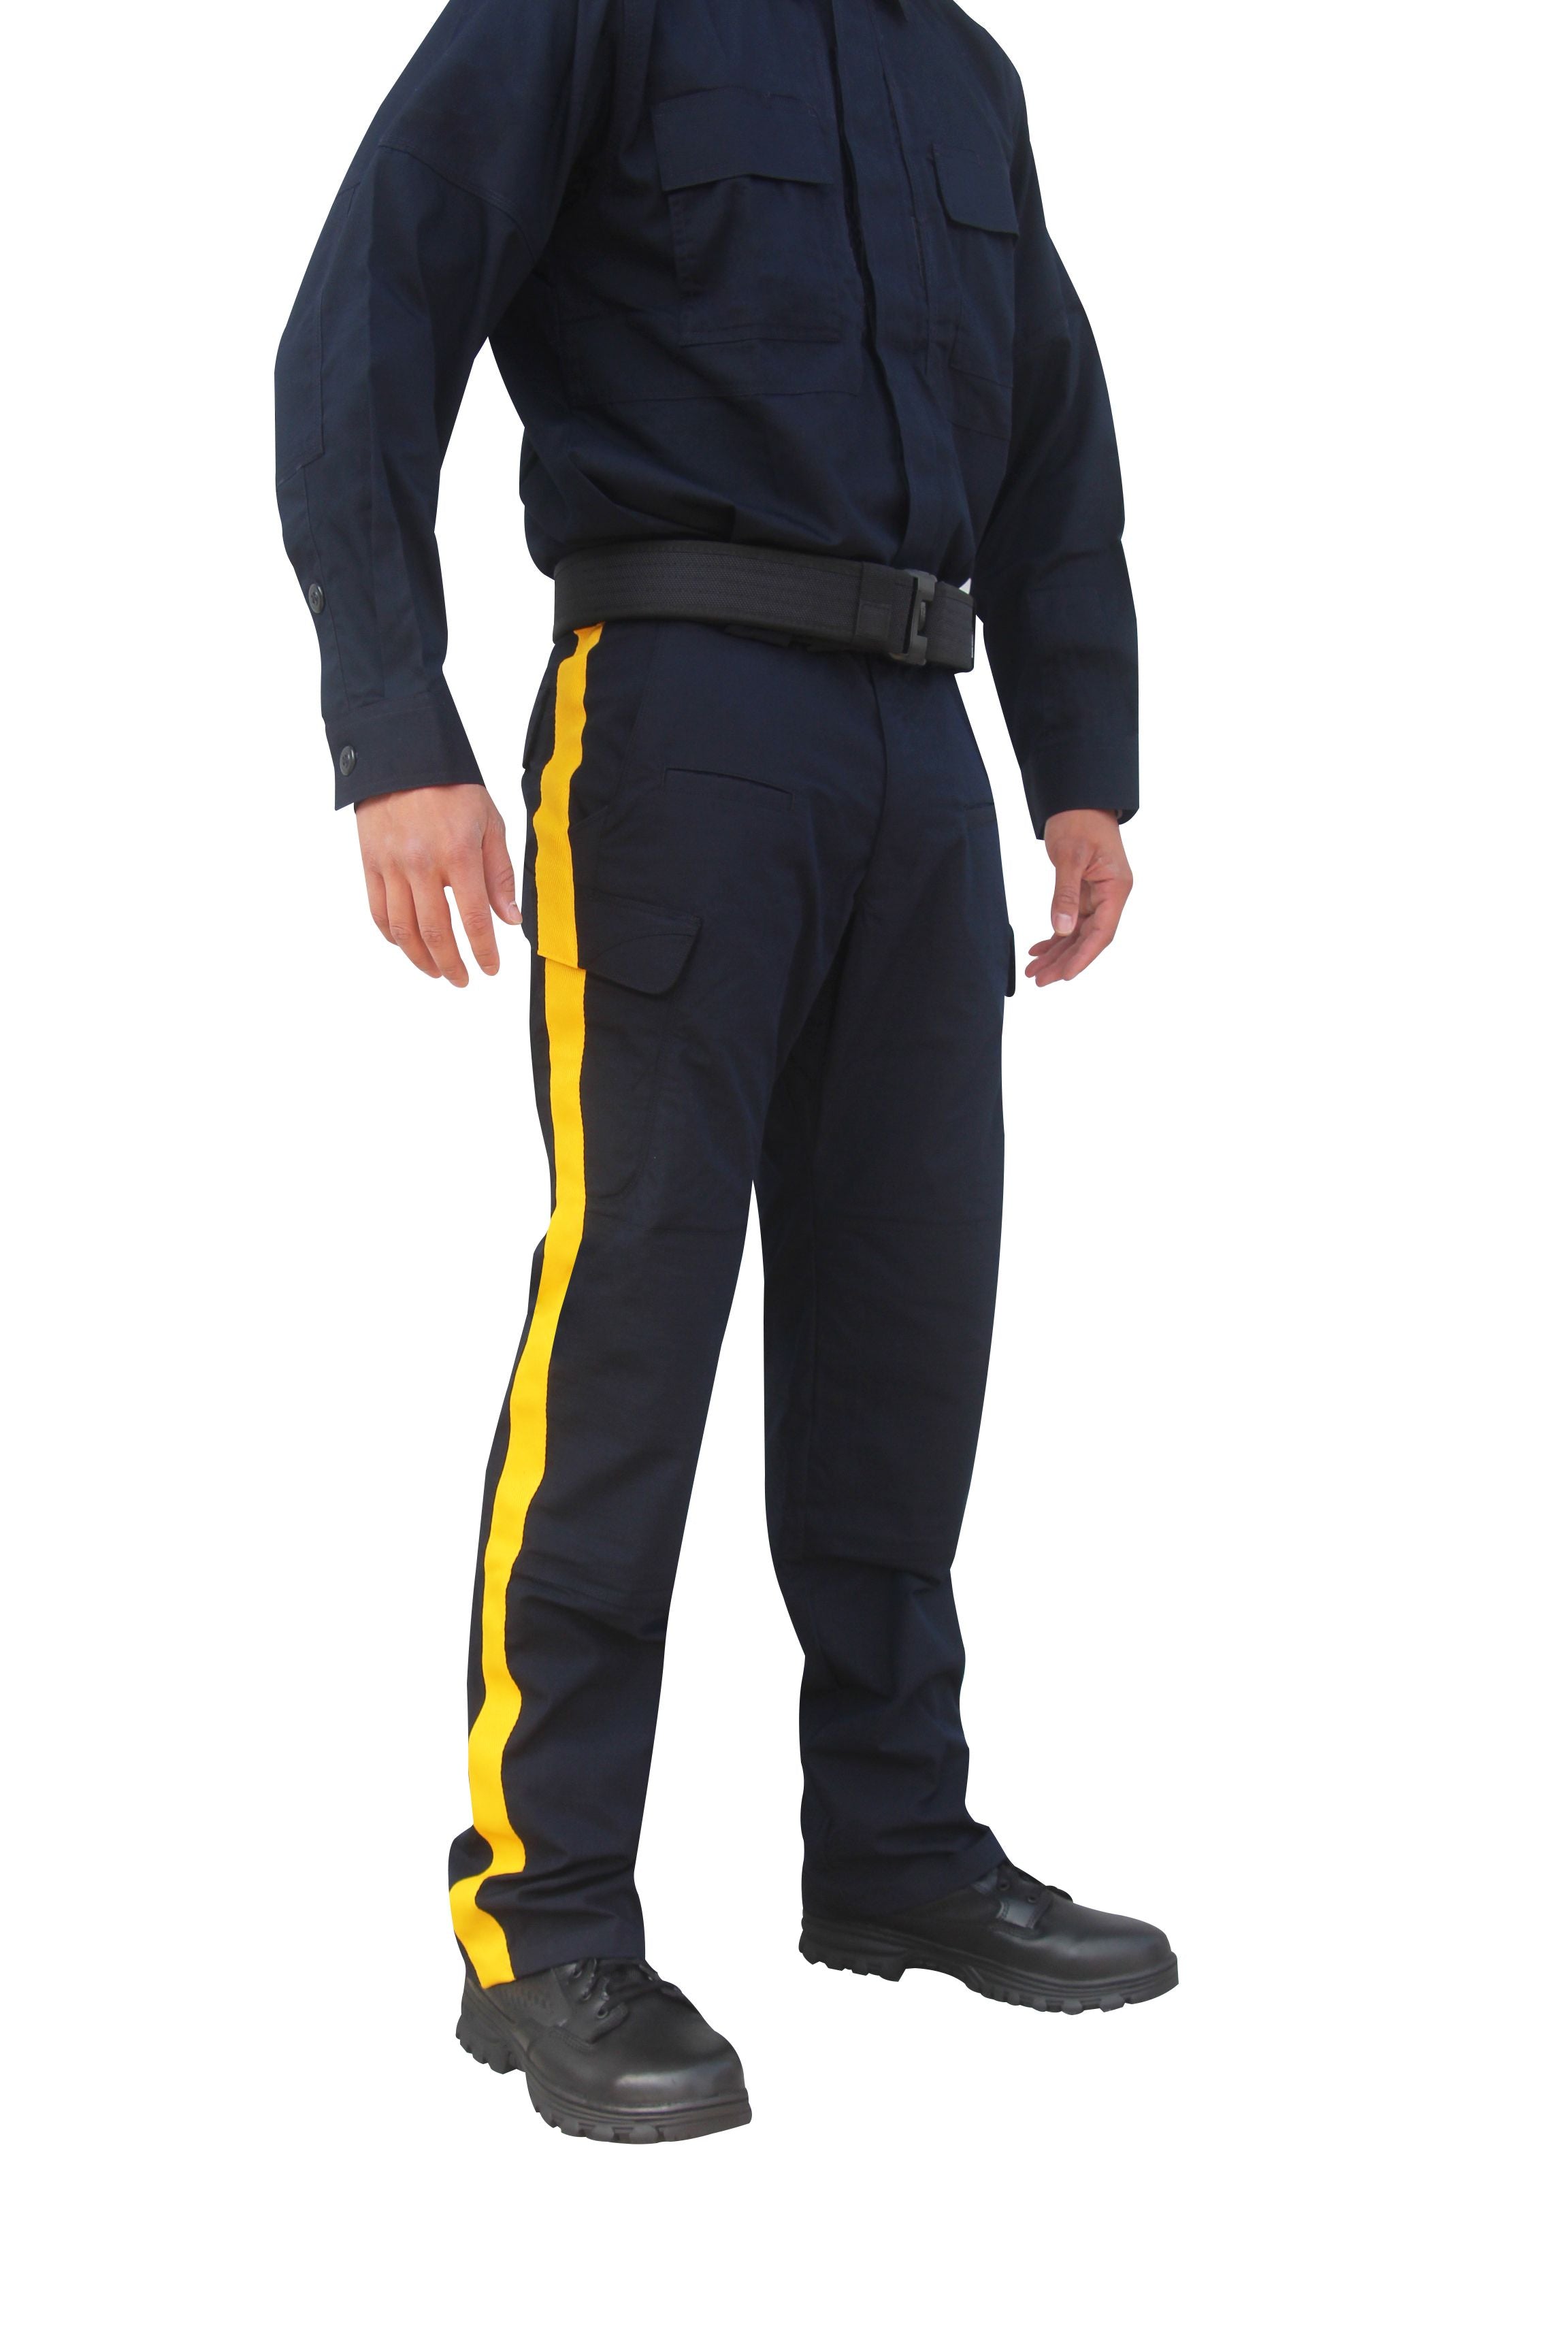 Tactical Uniform for Military, Law Enforcement | Buy 5.11 Stryke Pant  Online | Pro K9 Supplies